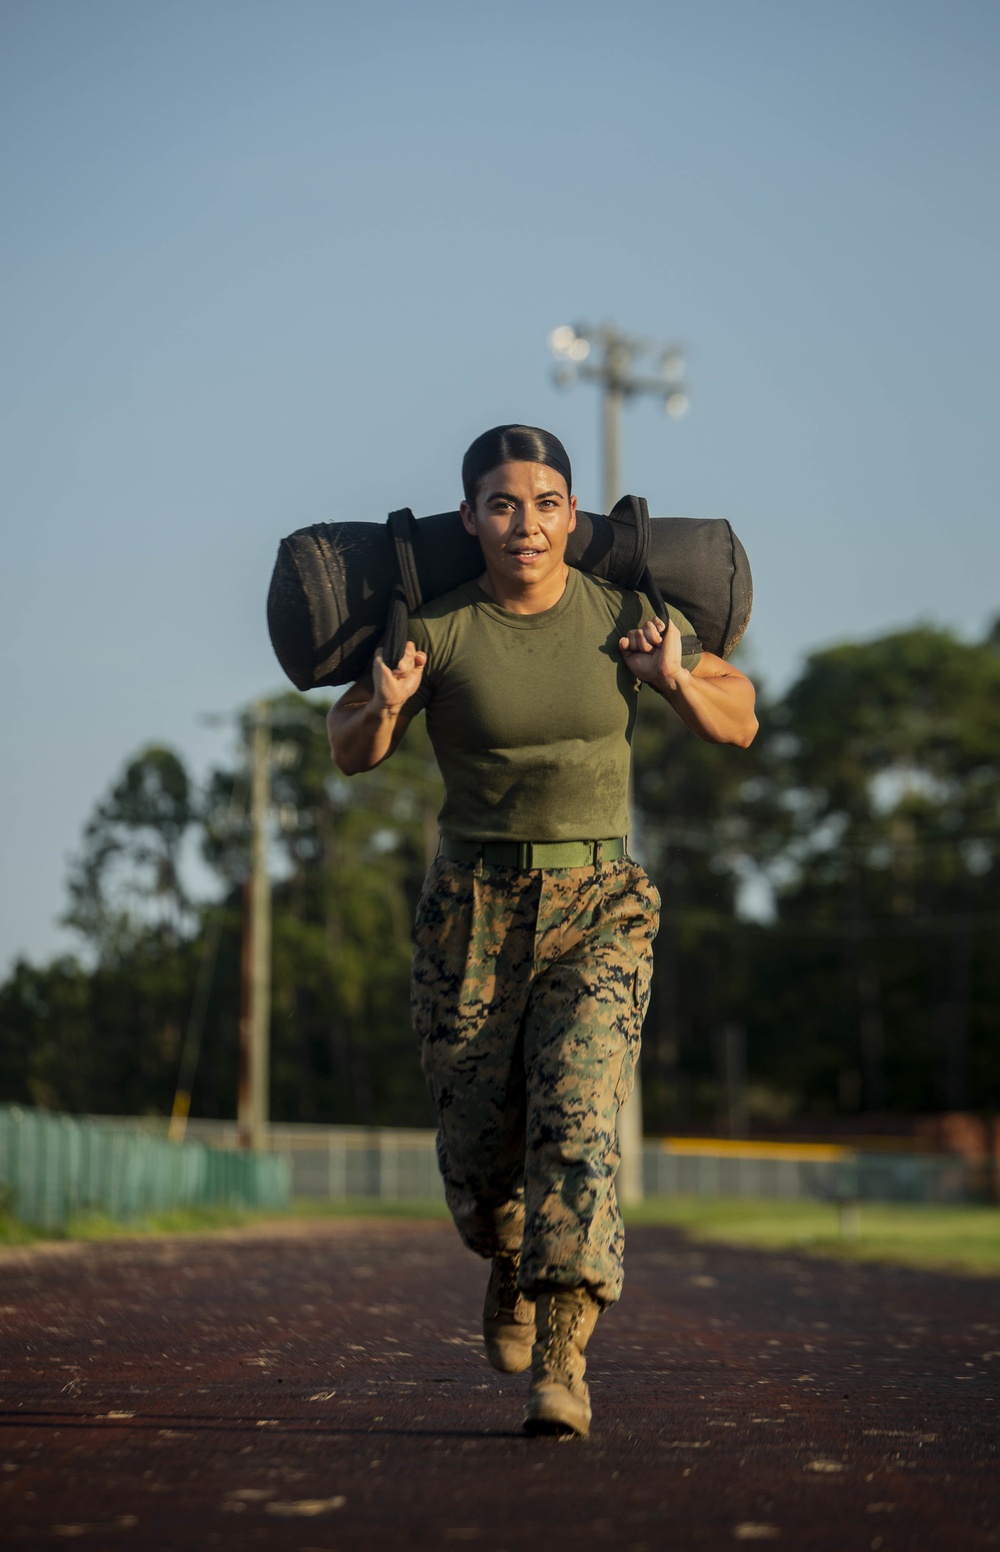 Marine Corps bases put kibosh on wearing fitness attire at